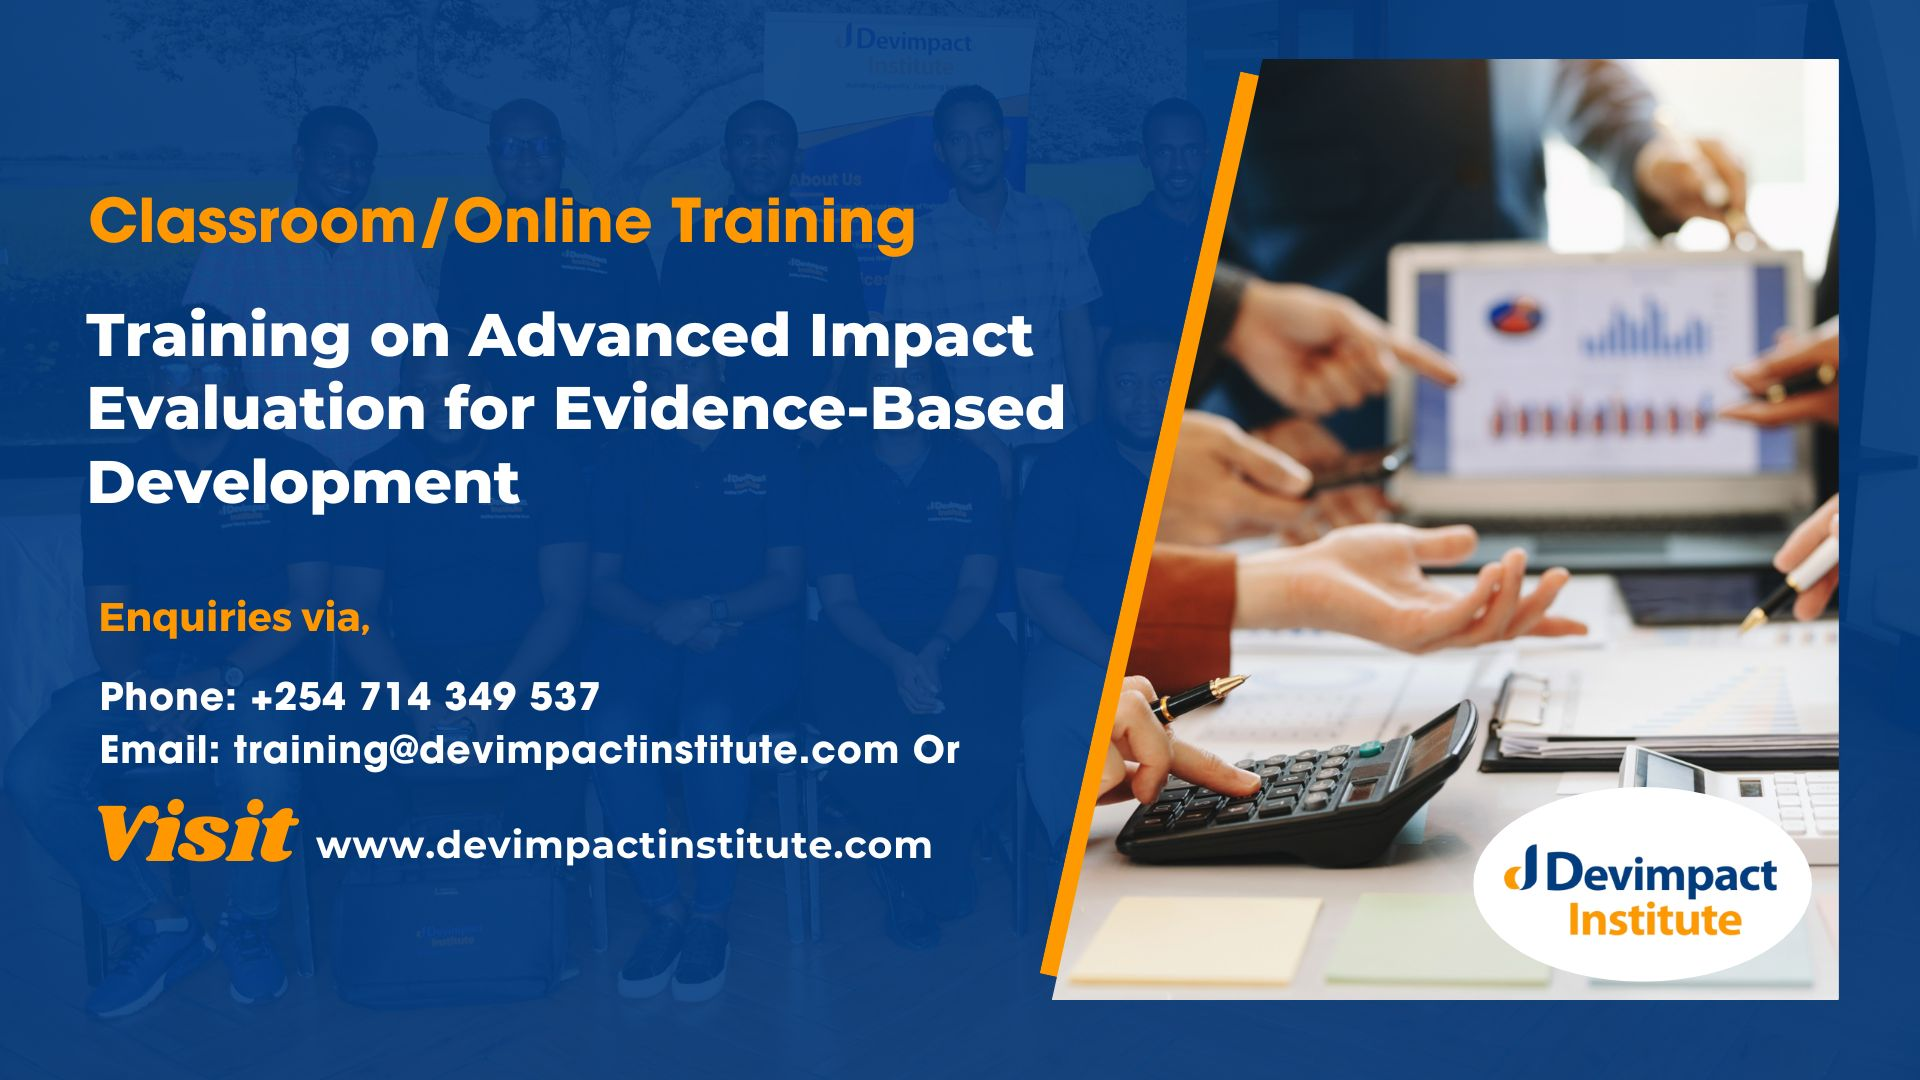 Training on Advanced Impact Evaluation for Evidence-Based Development, Devimpact Institute, Nairobi, Kenya